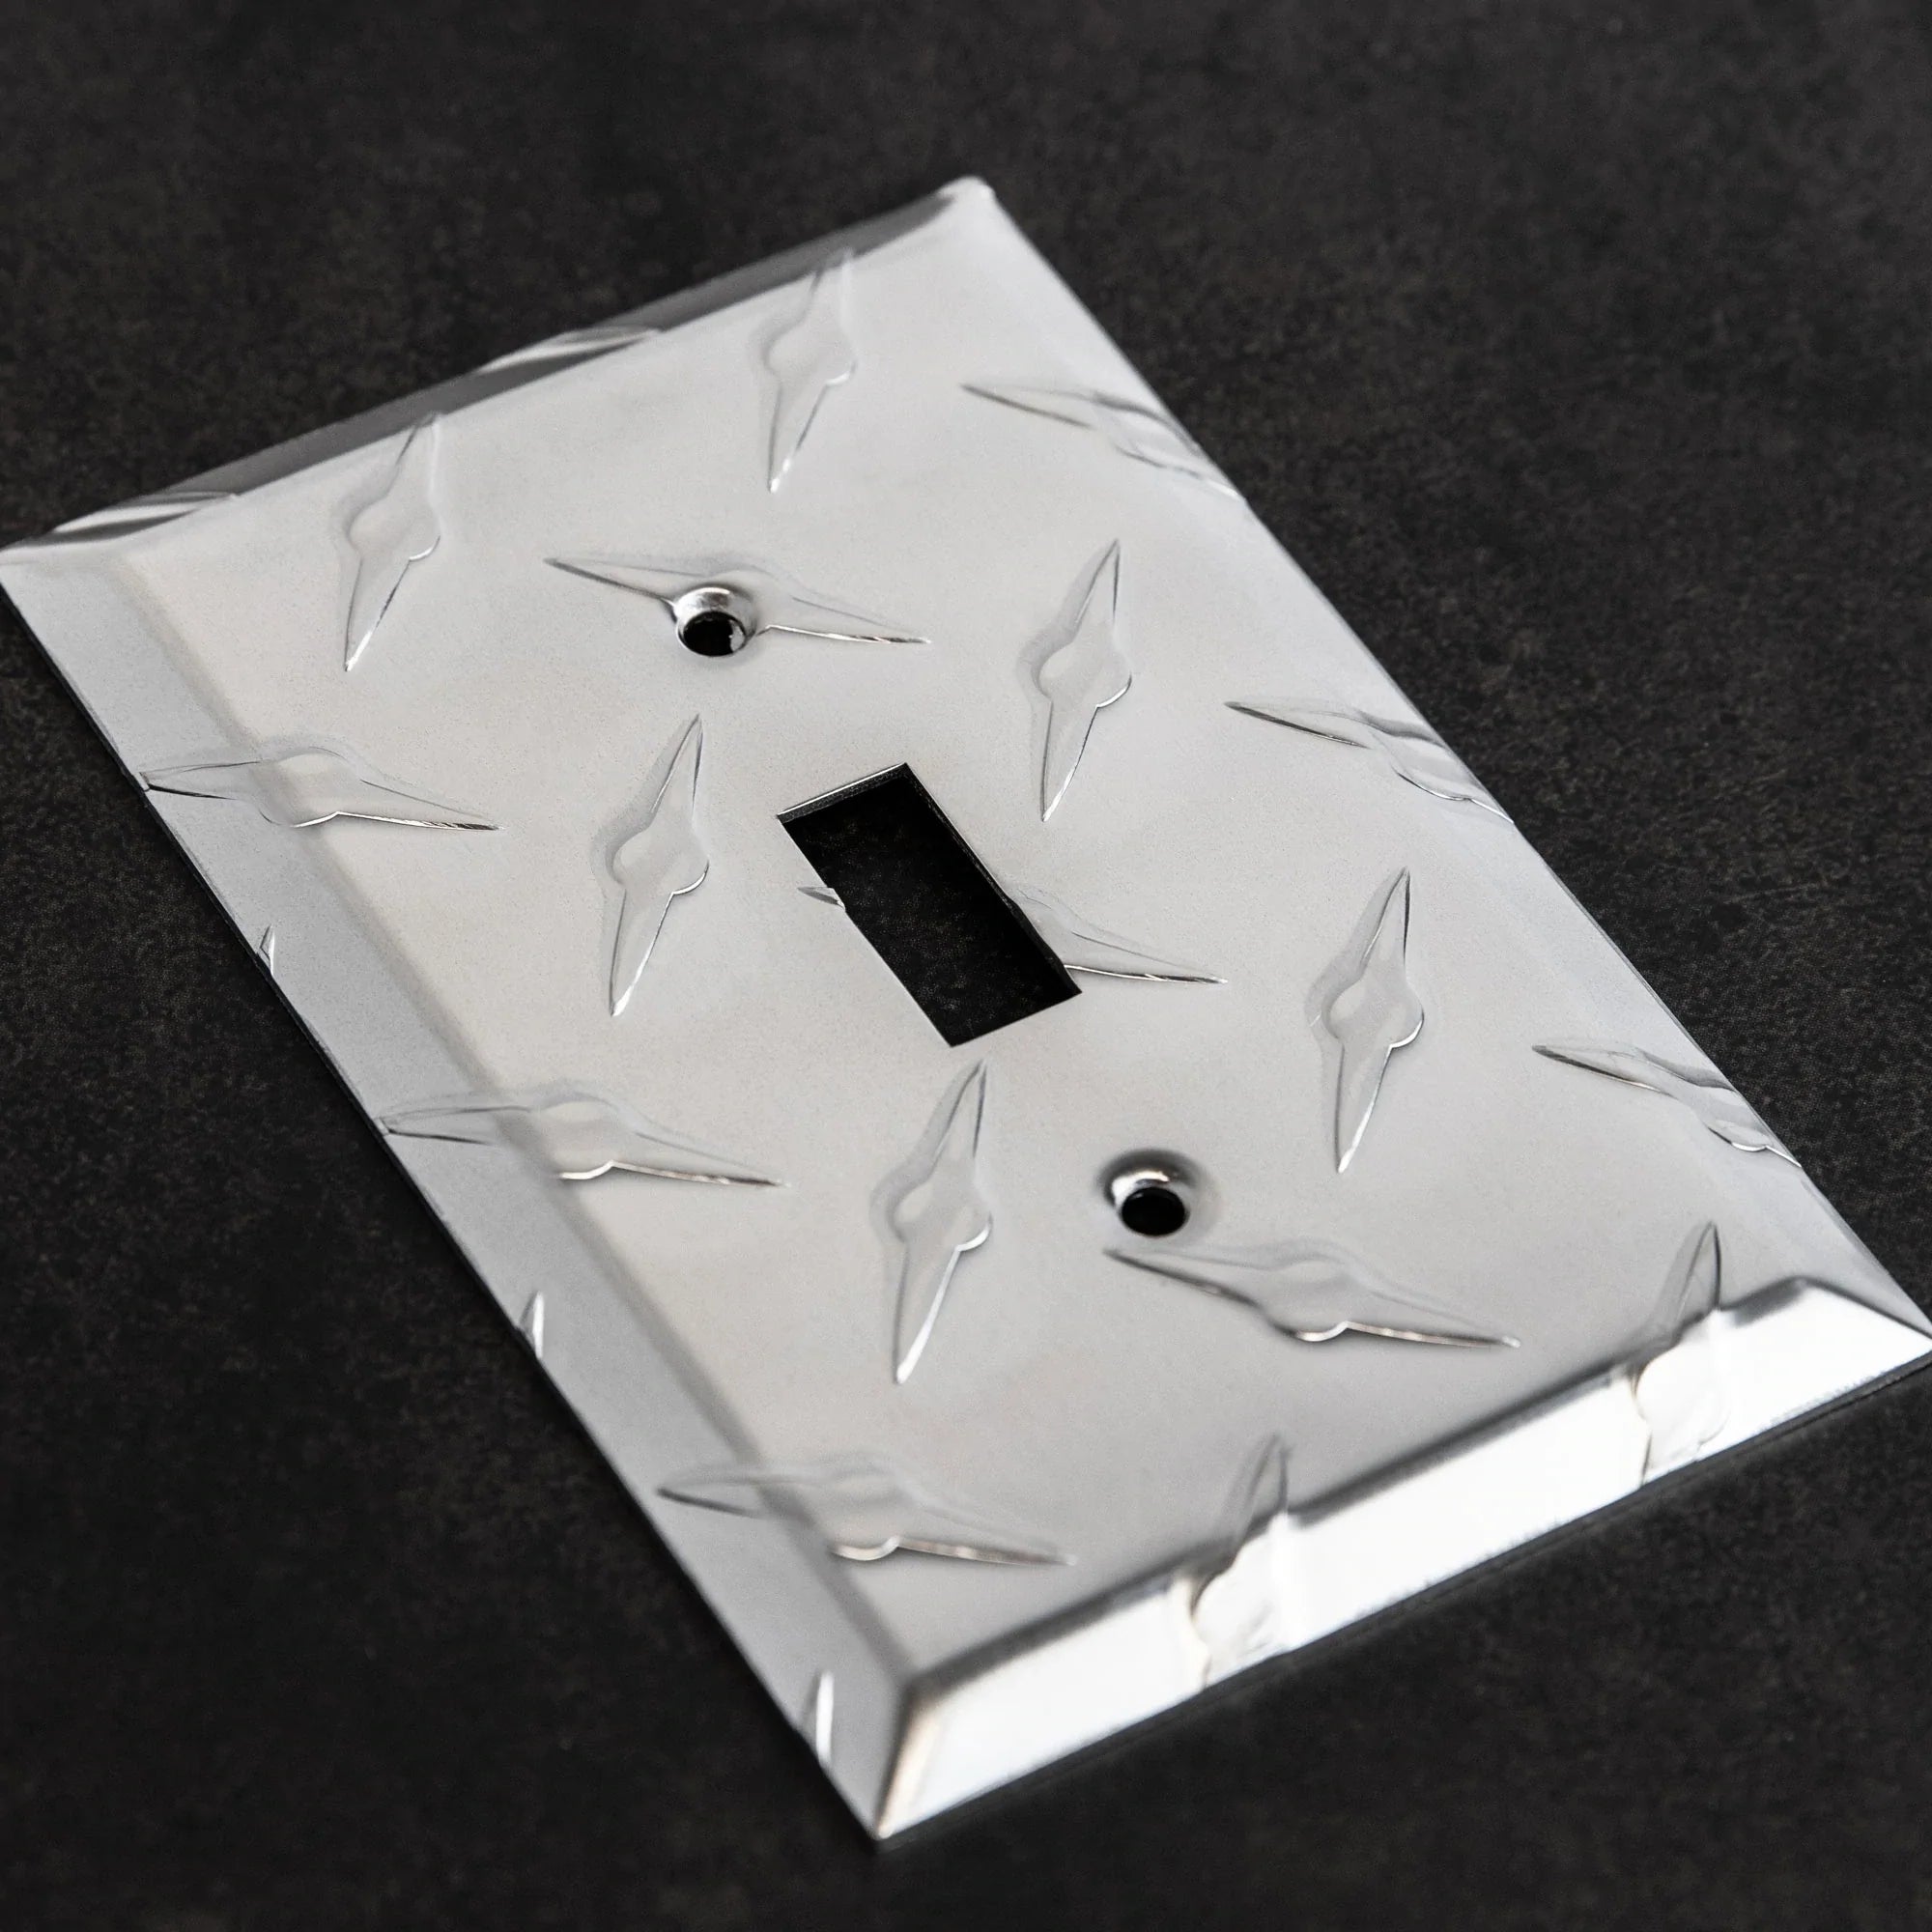 Diamond Plate Aluminum - 1 Rocker Wallplate